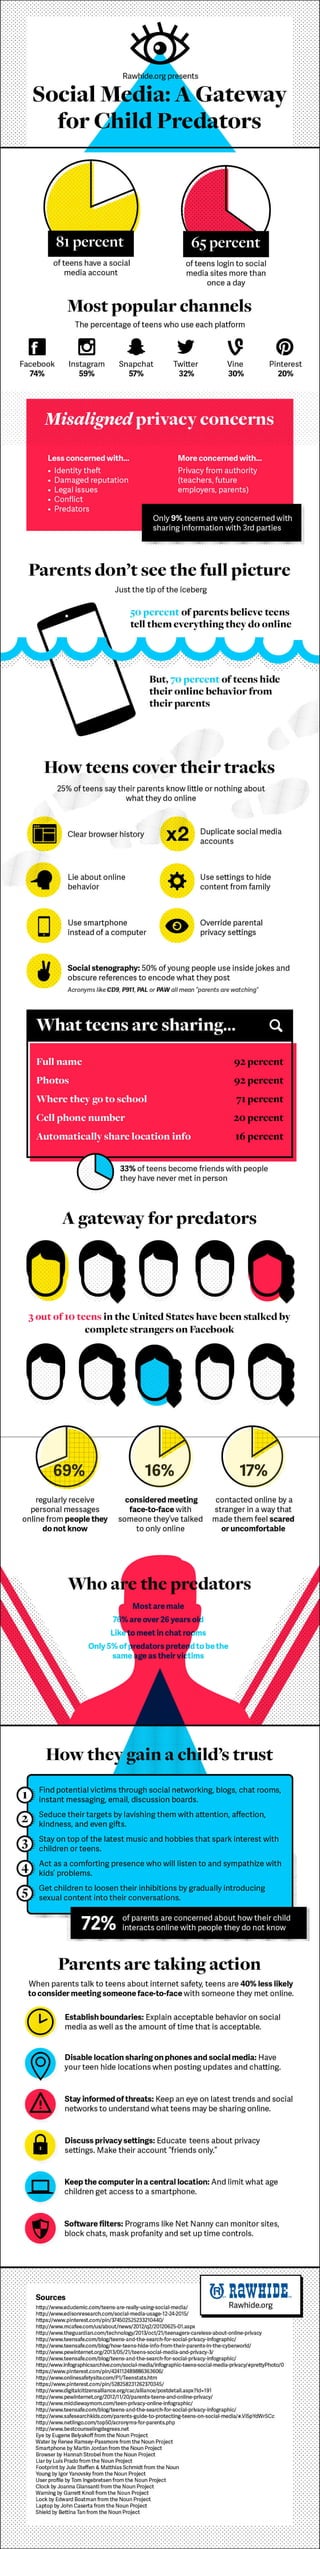 Social Media: A Gateway For Child Predators - Infographic